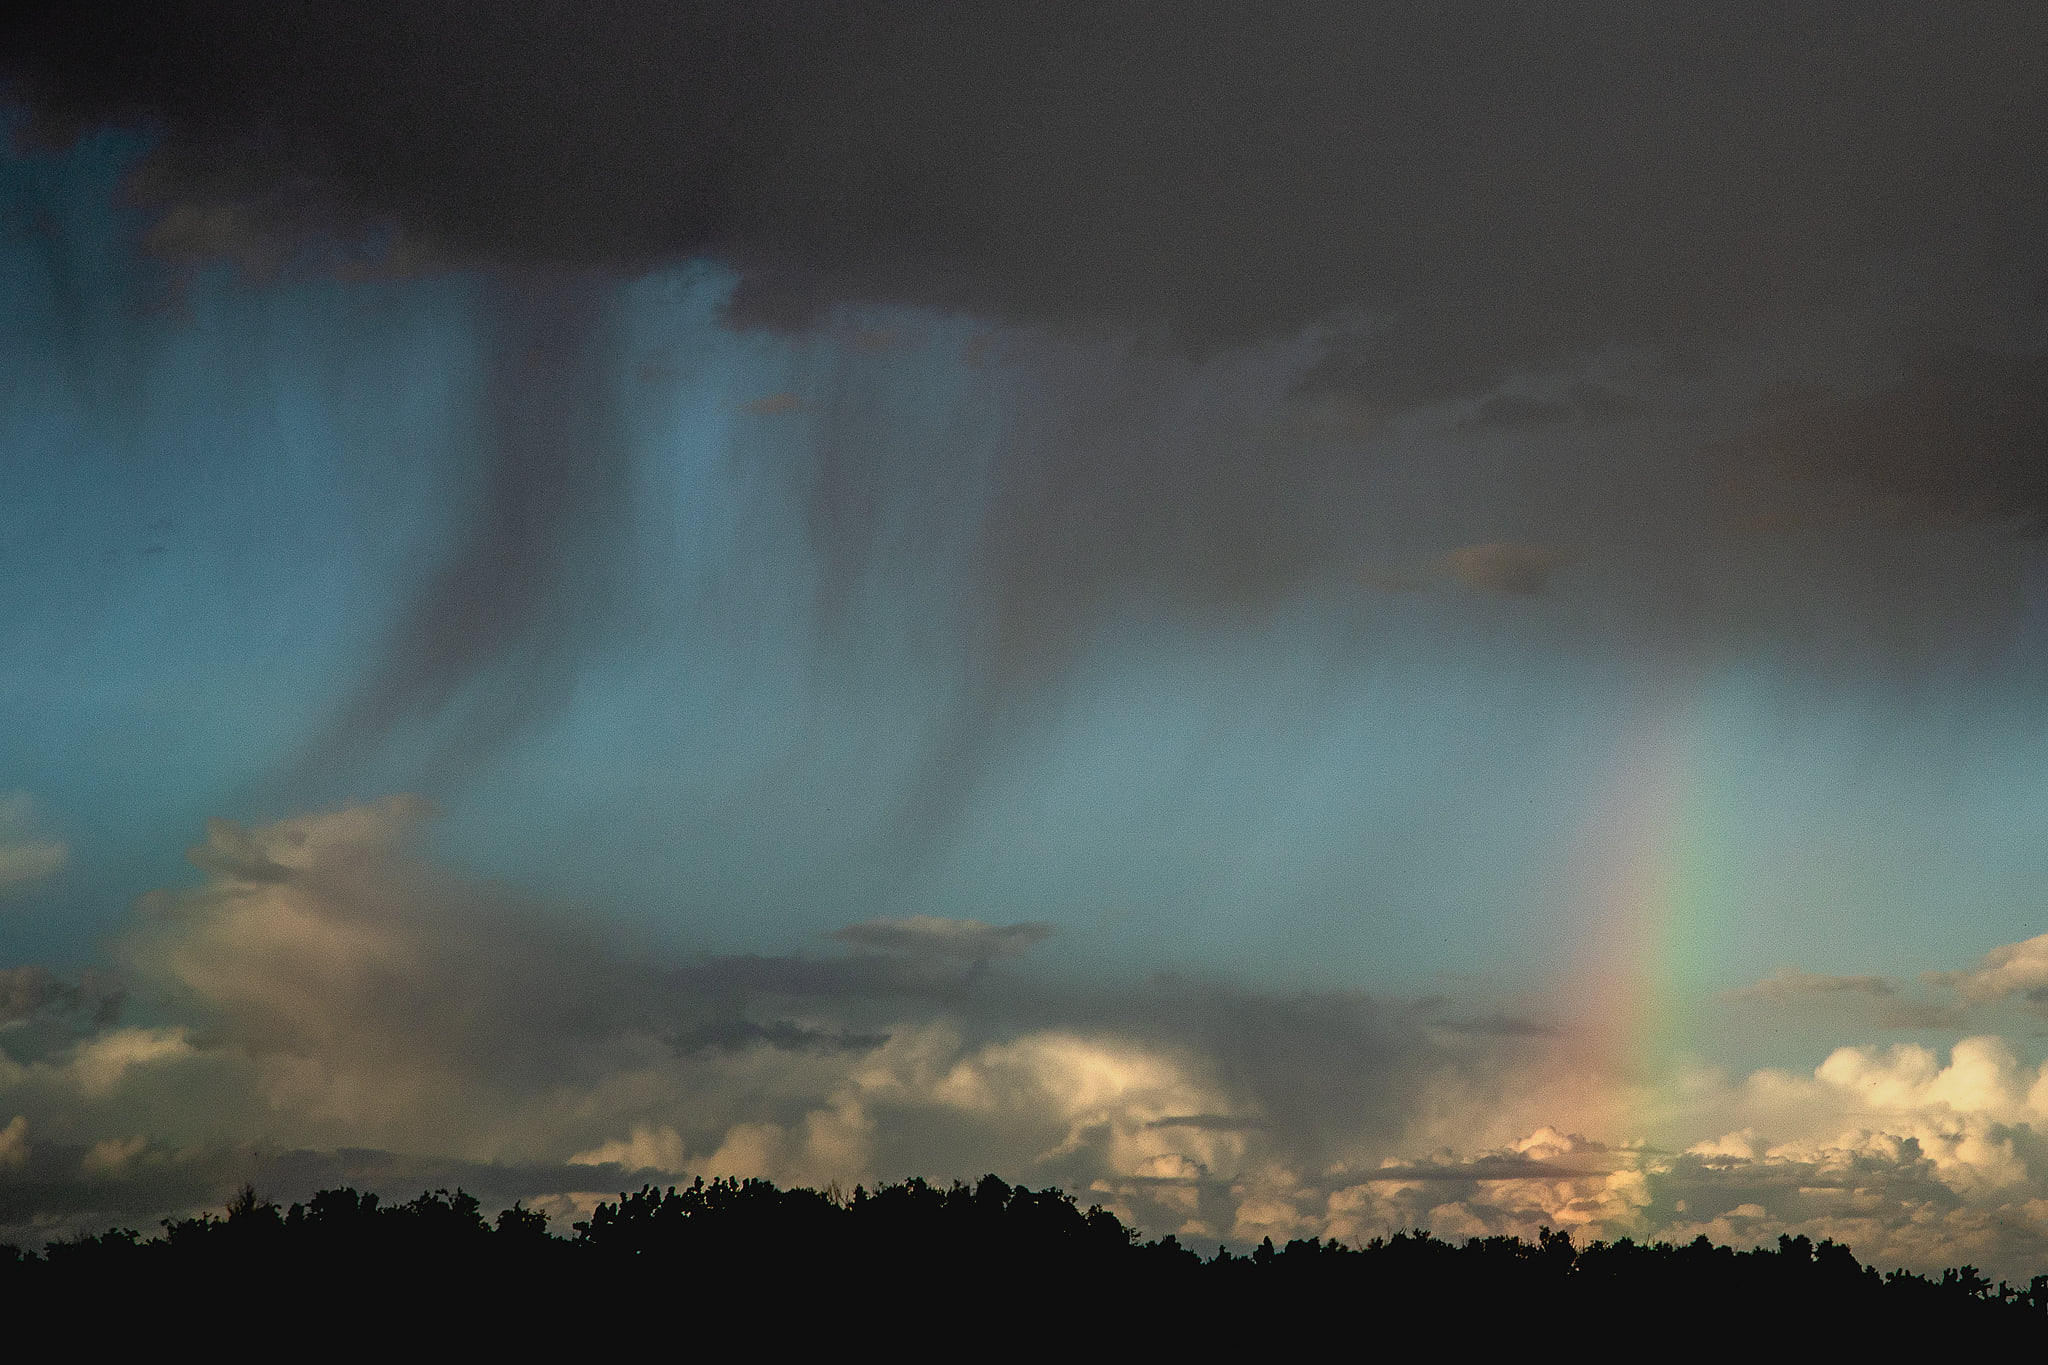 Stormy sky with rain and a rainbow